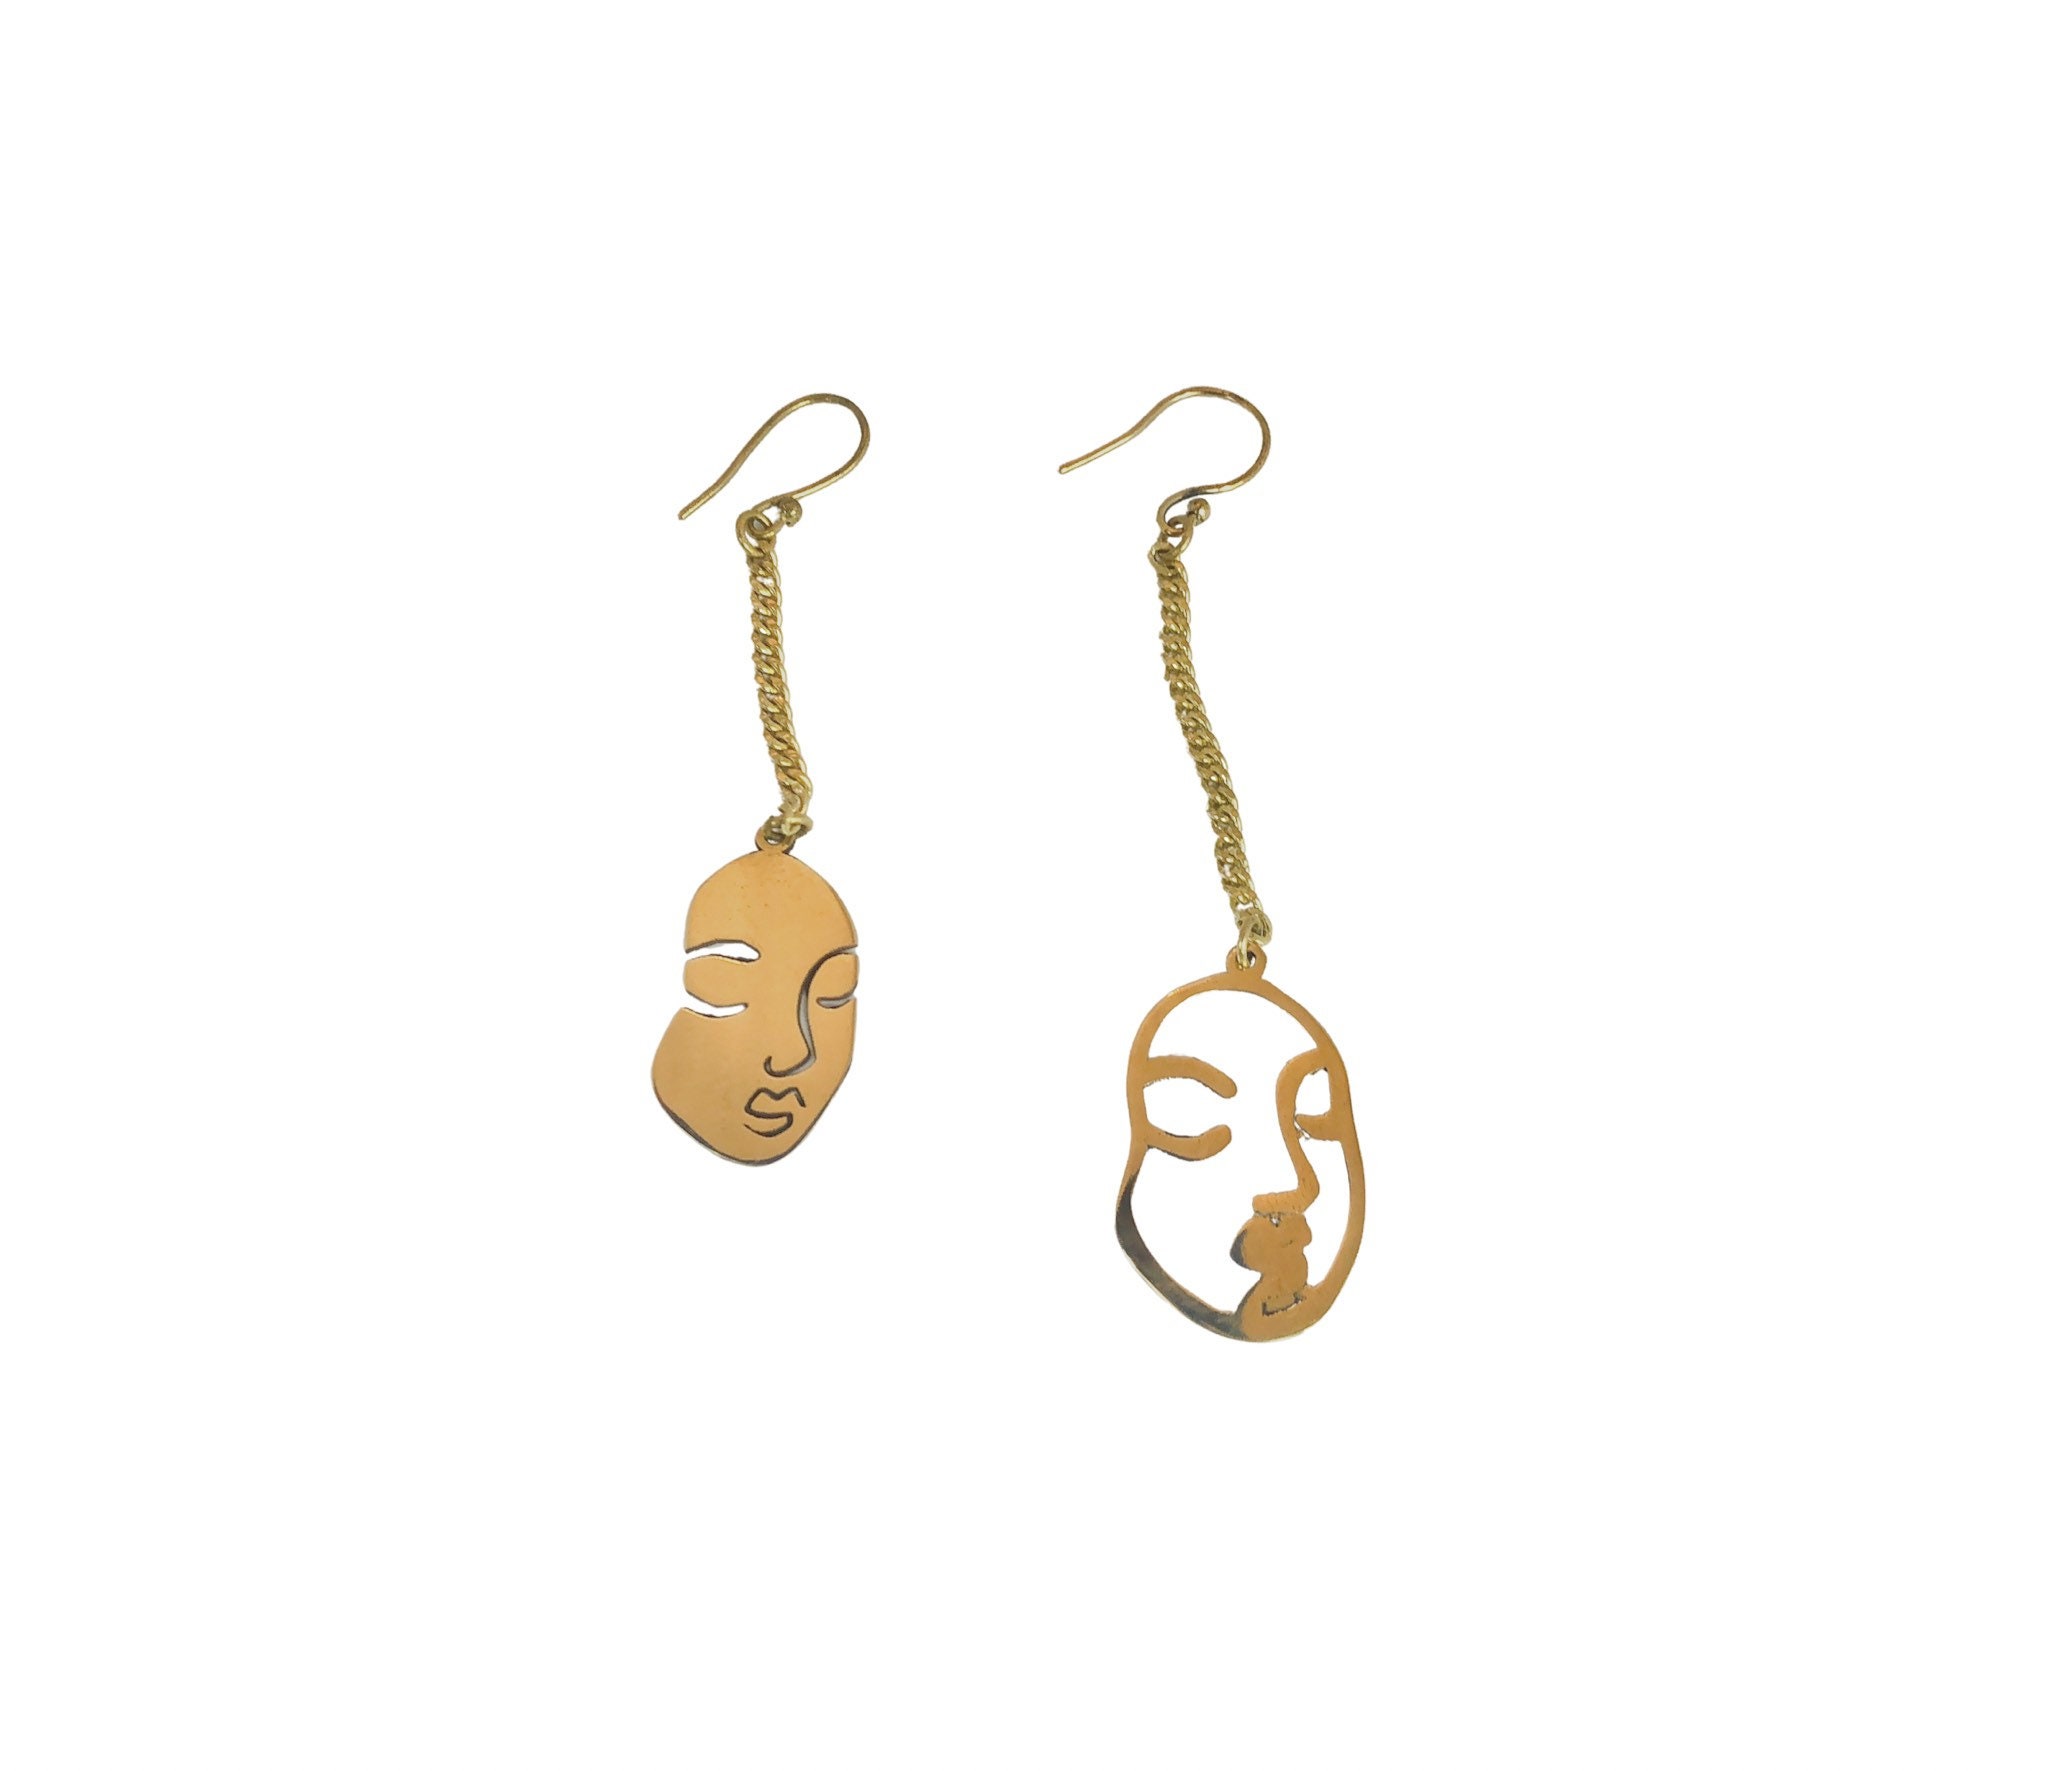 2 Pieces Brass Earring Findings - Wholesale earring findings for jewelry  making parts. Bohemian Earring Findings - 8131